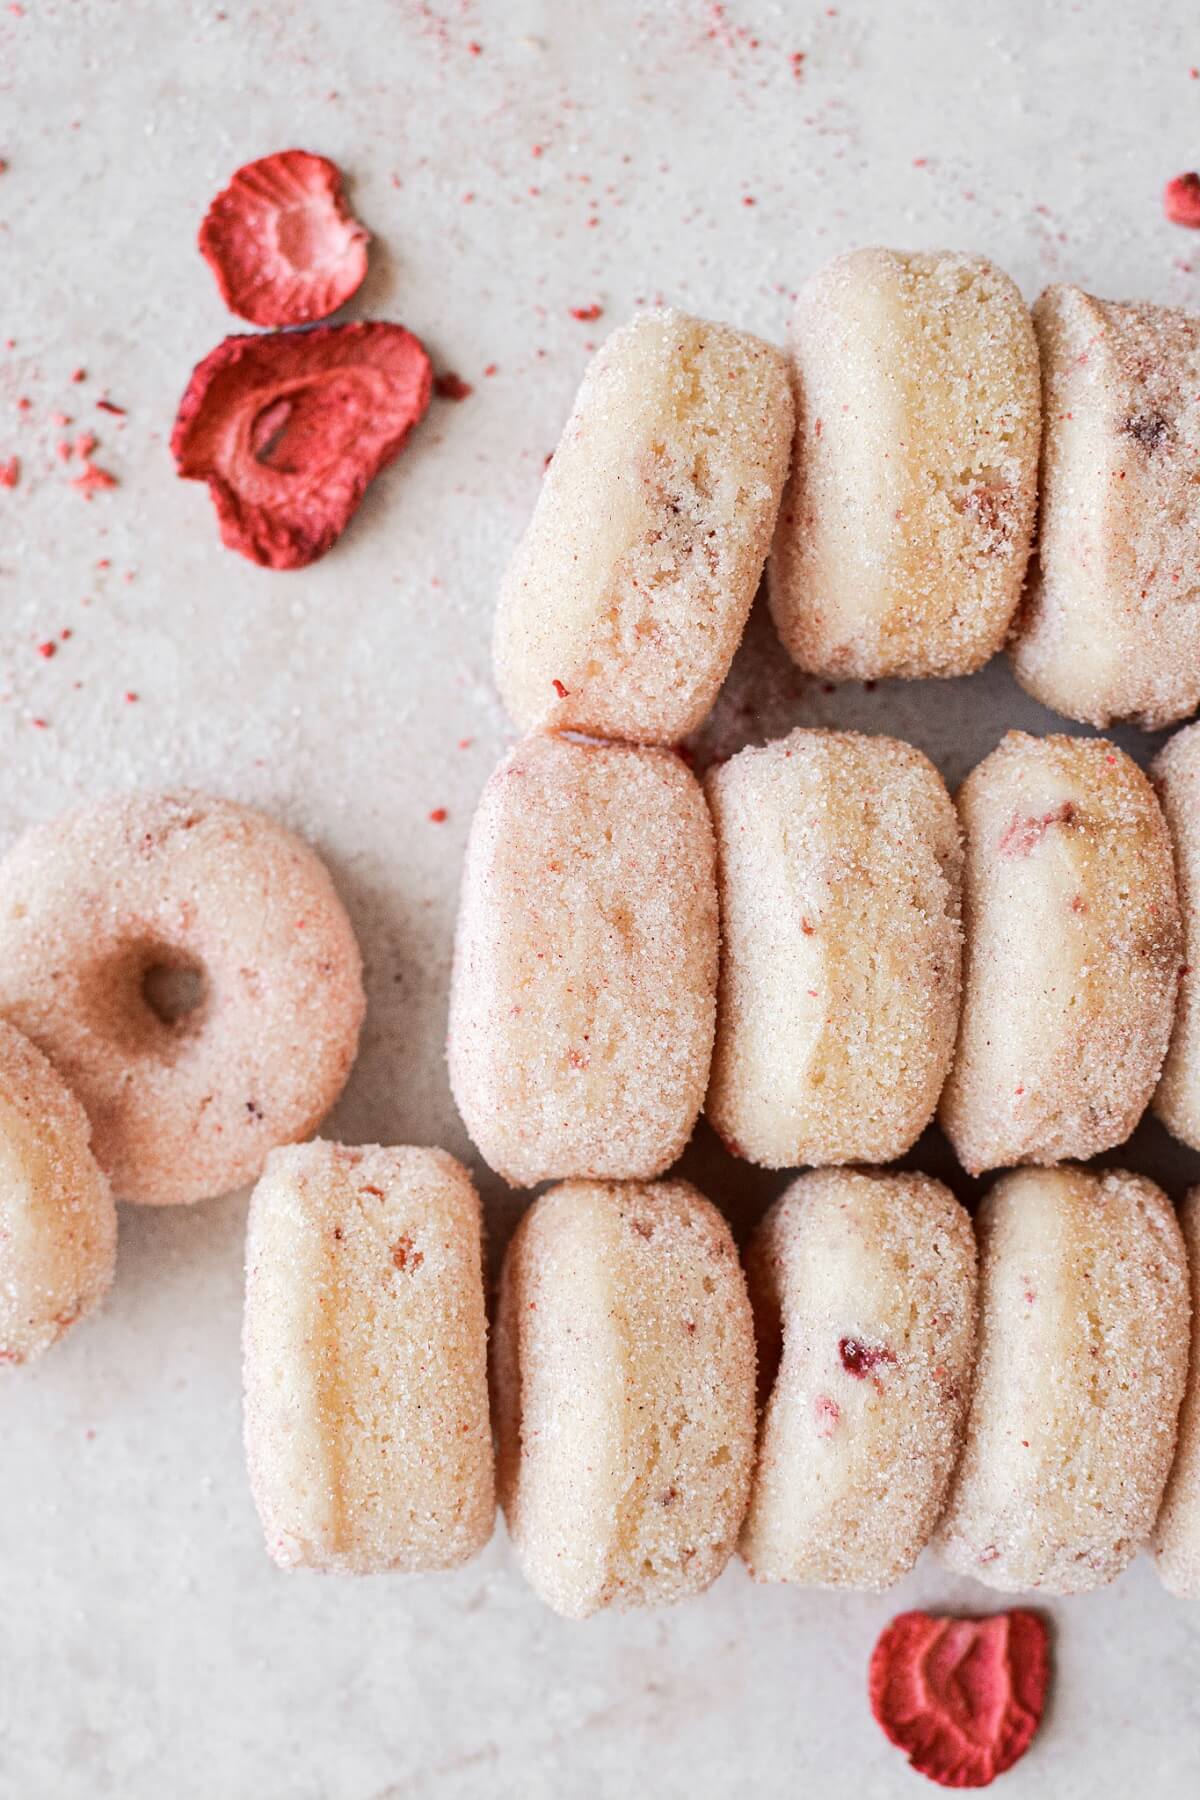 Baked mini strawberry donuts.